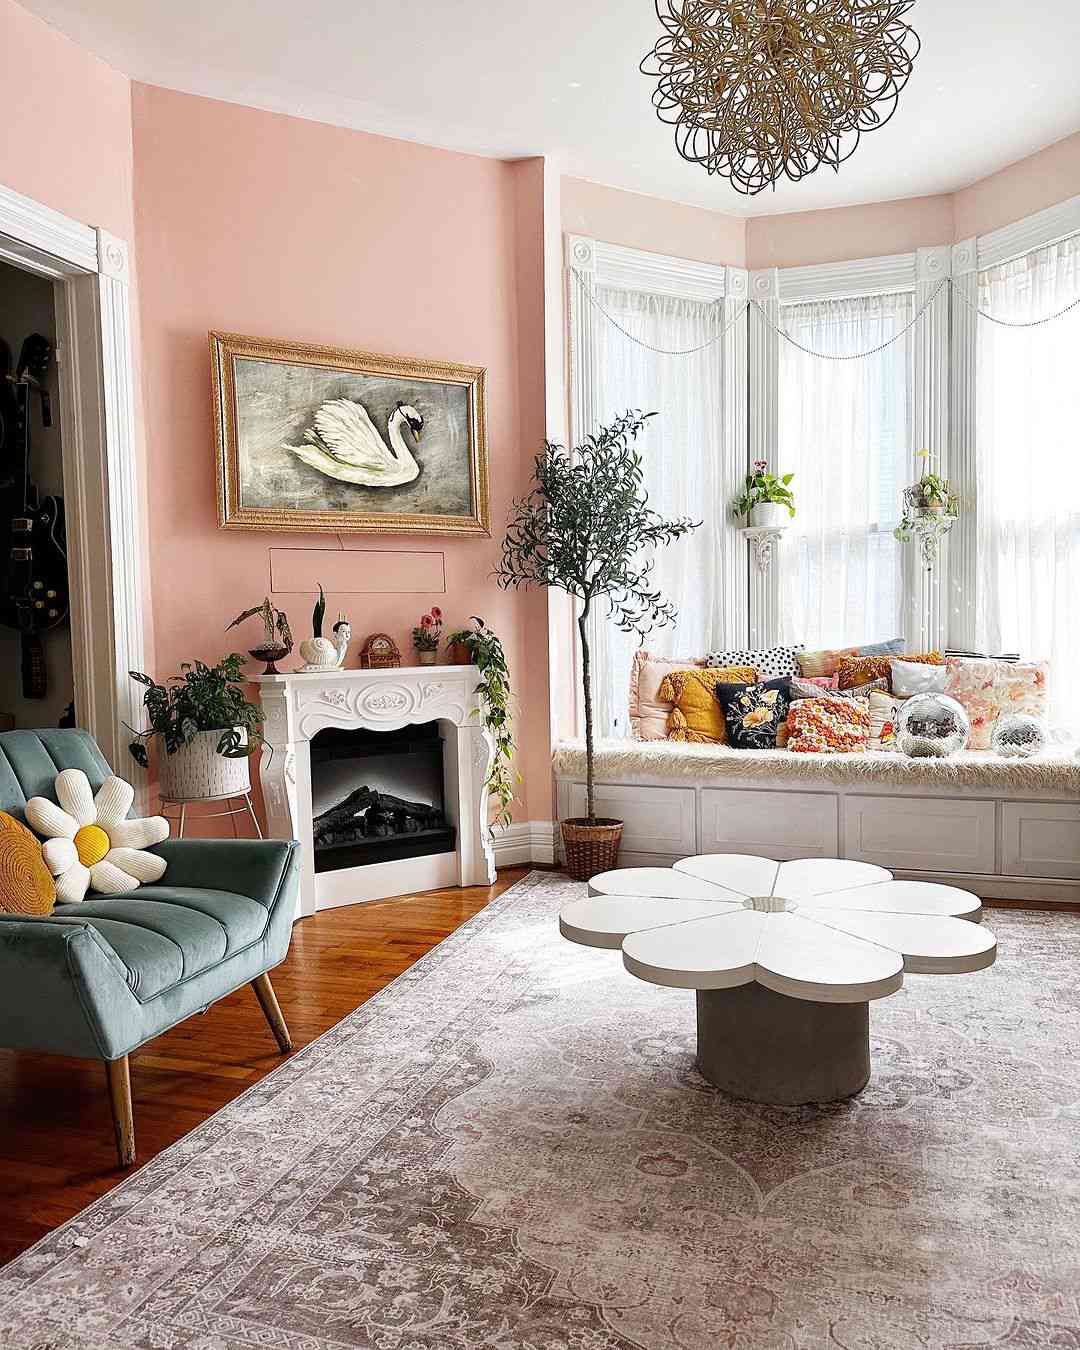 murs roses avec peinture cygne 